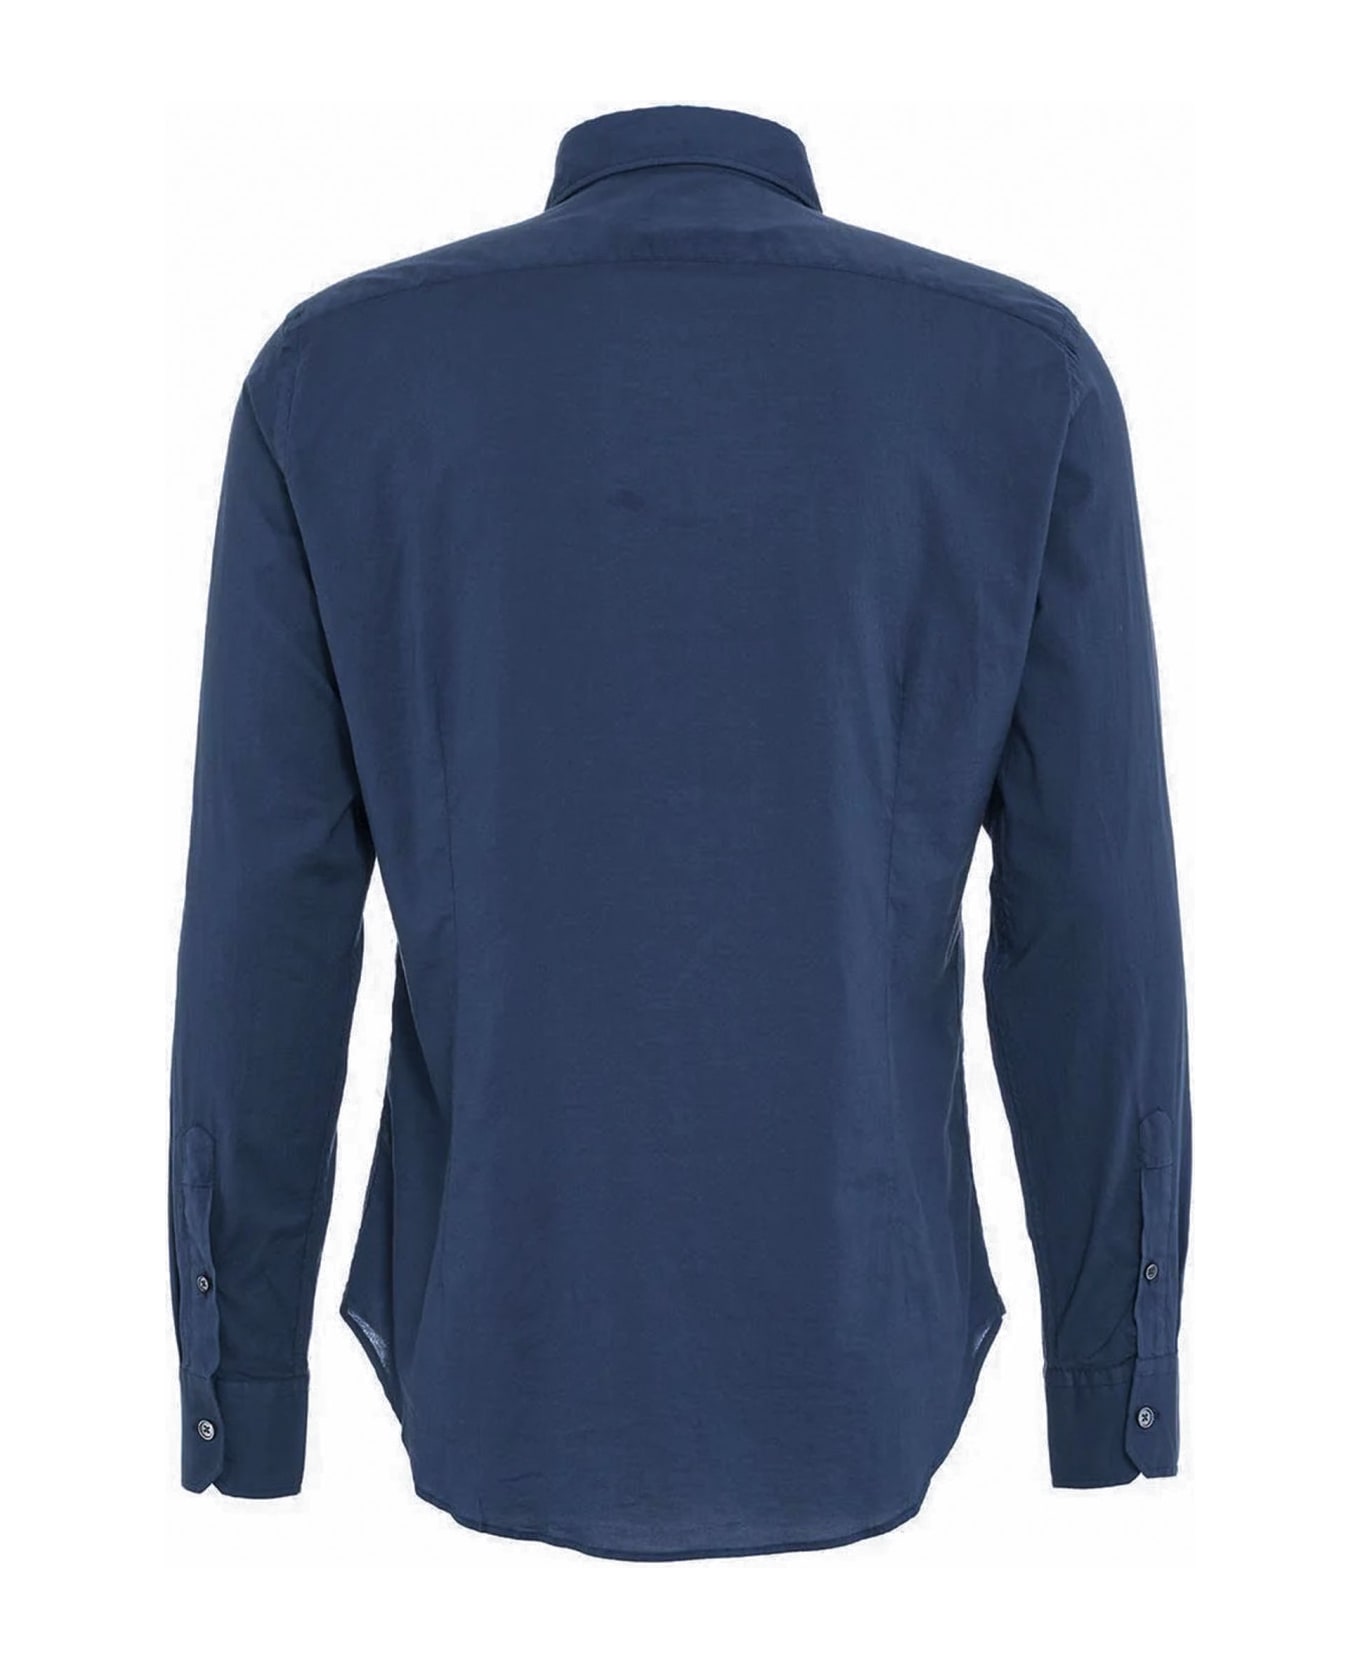 Fedeli Navy Blue Cotton Shirt Shirt - BLU